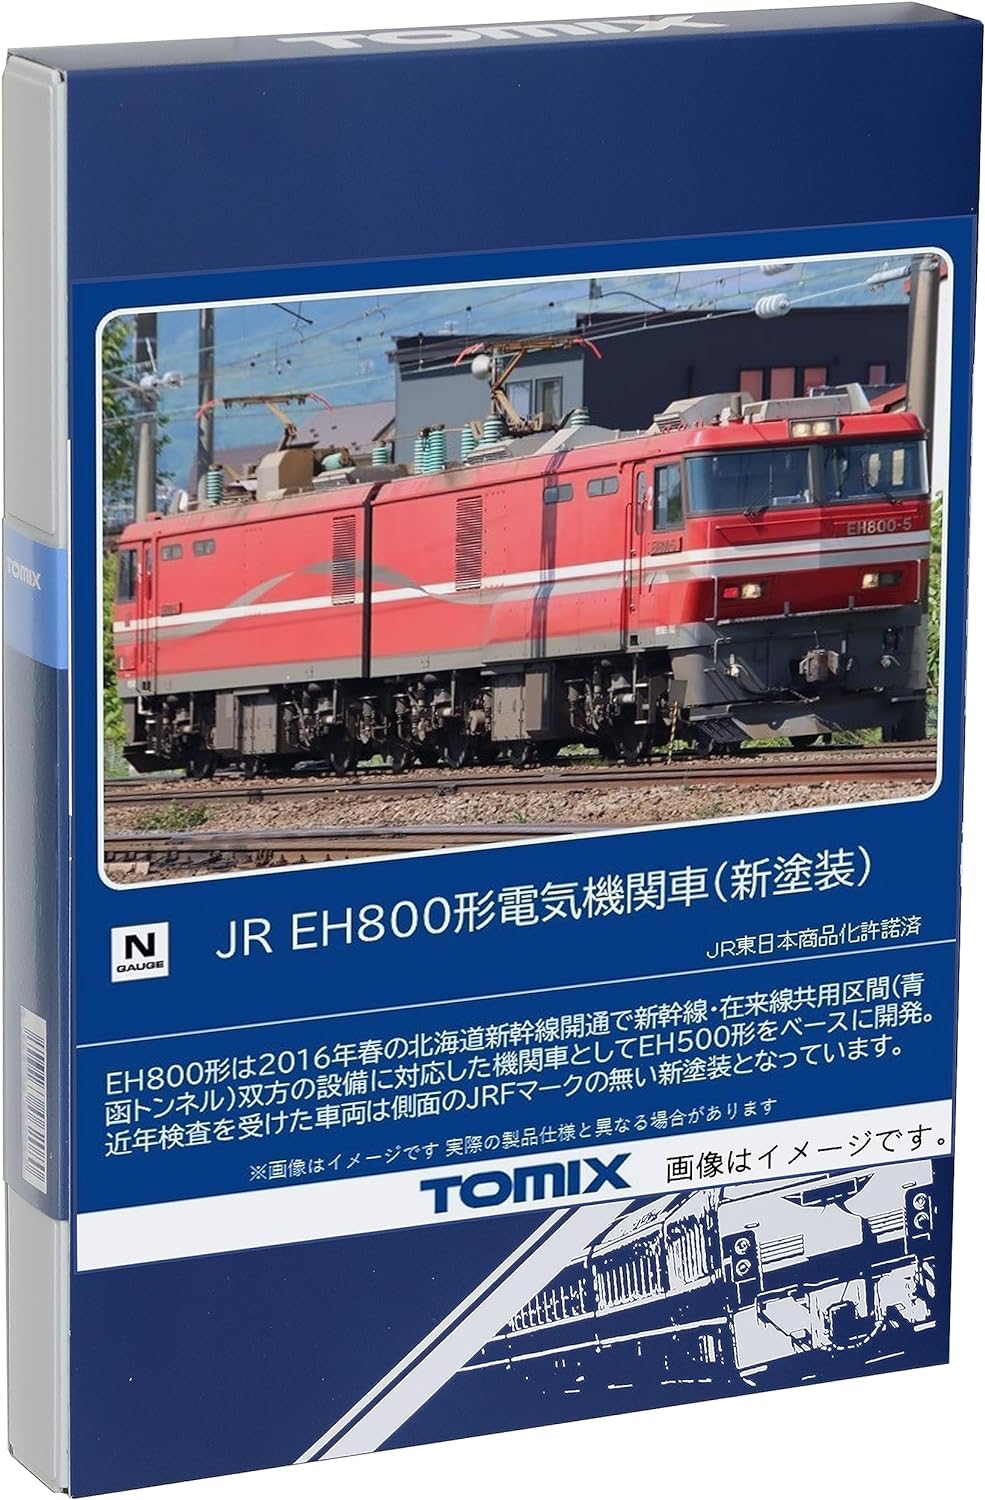 TOMIX 7181 N Gauge JR EH800 Model Railway Electric Locomotive - BanzaiHobby